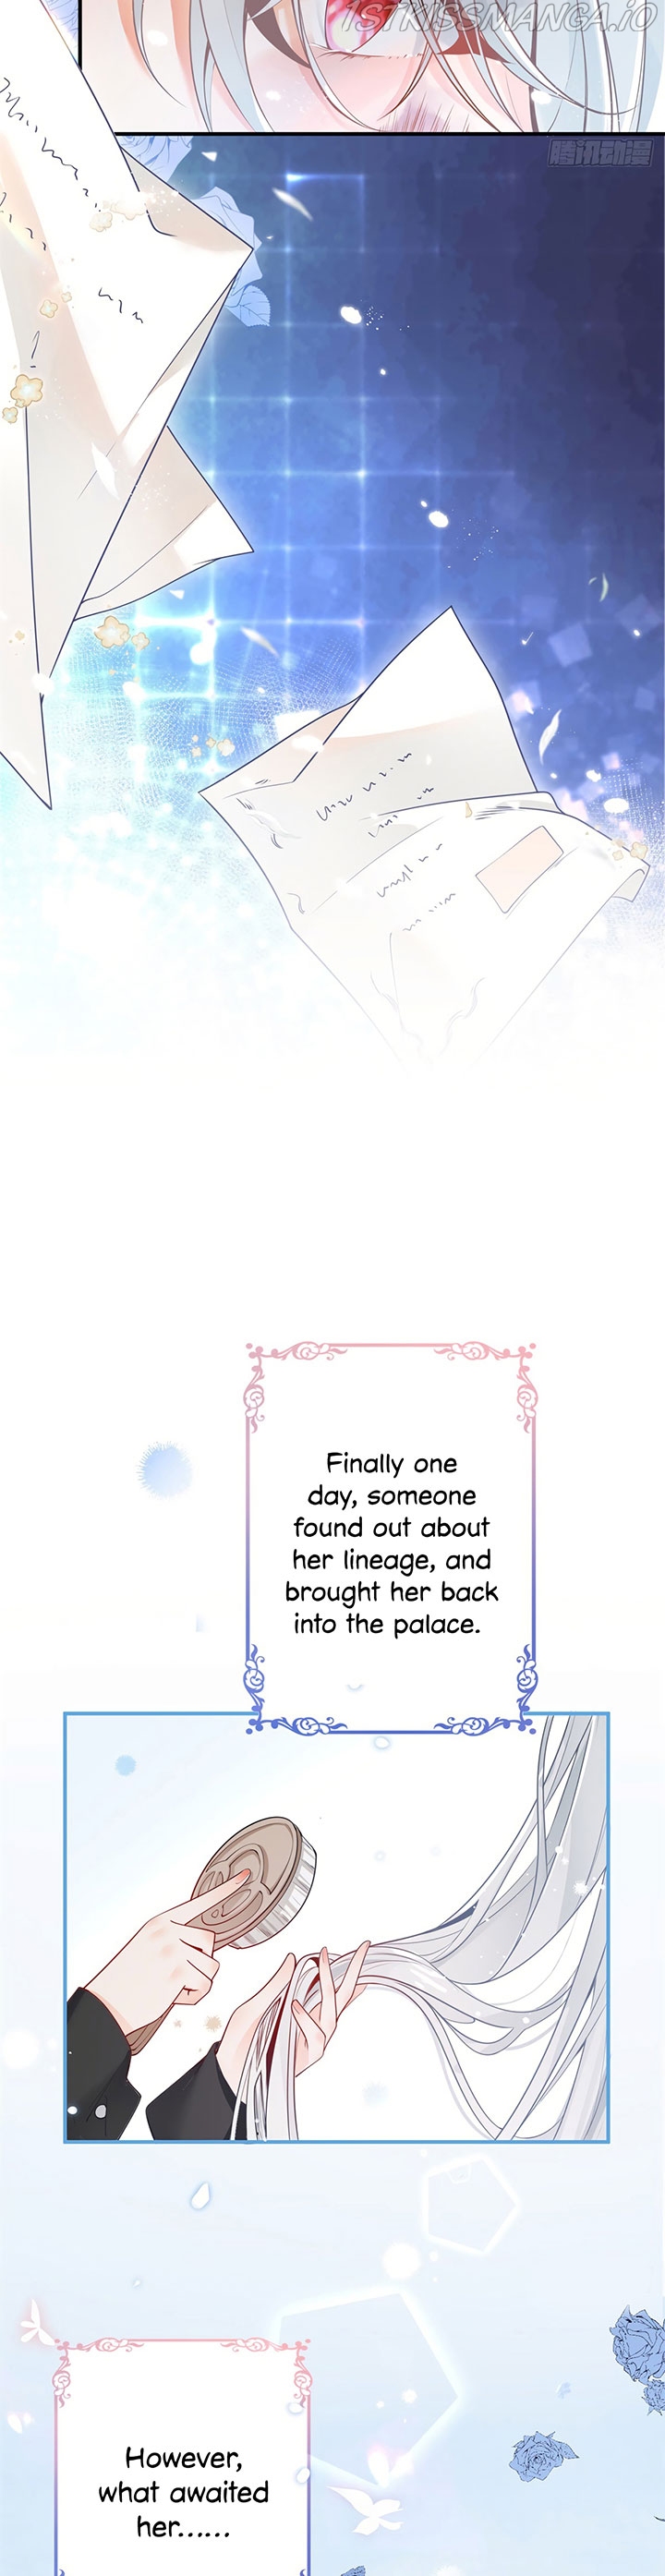 I Became the Sacrificial Princess Chapter 1 - Page 4